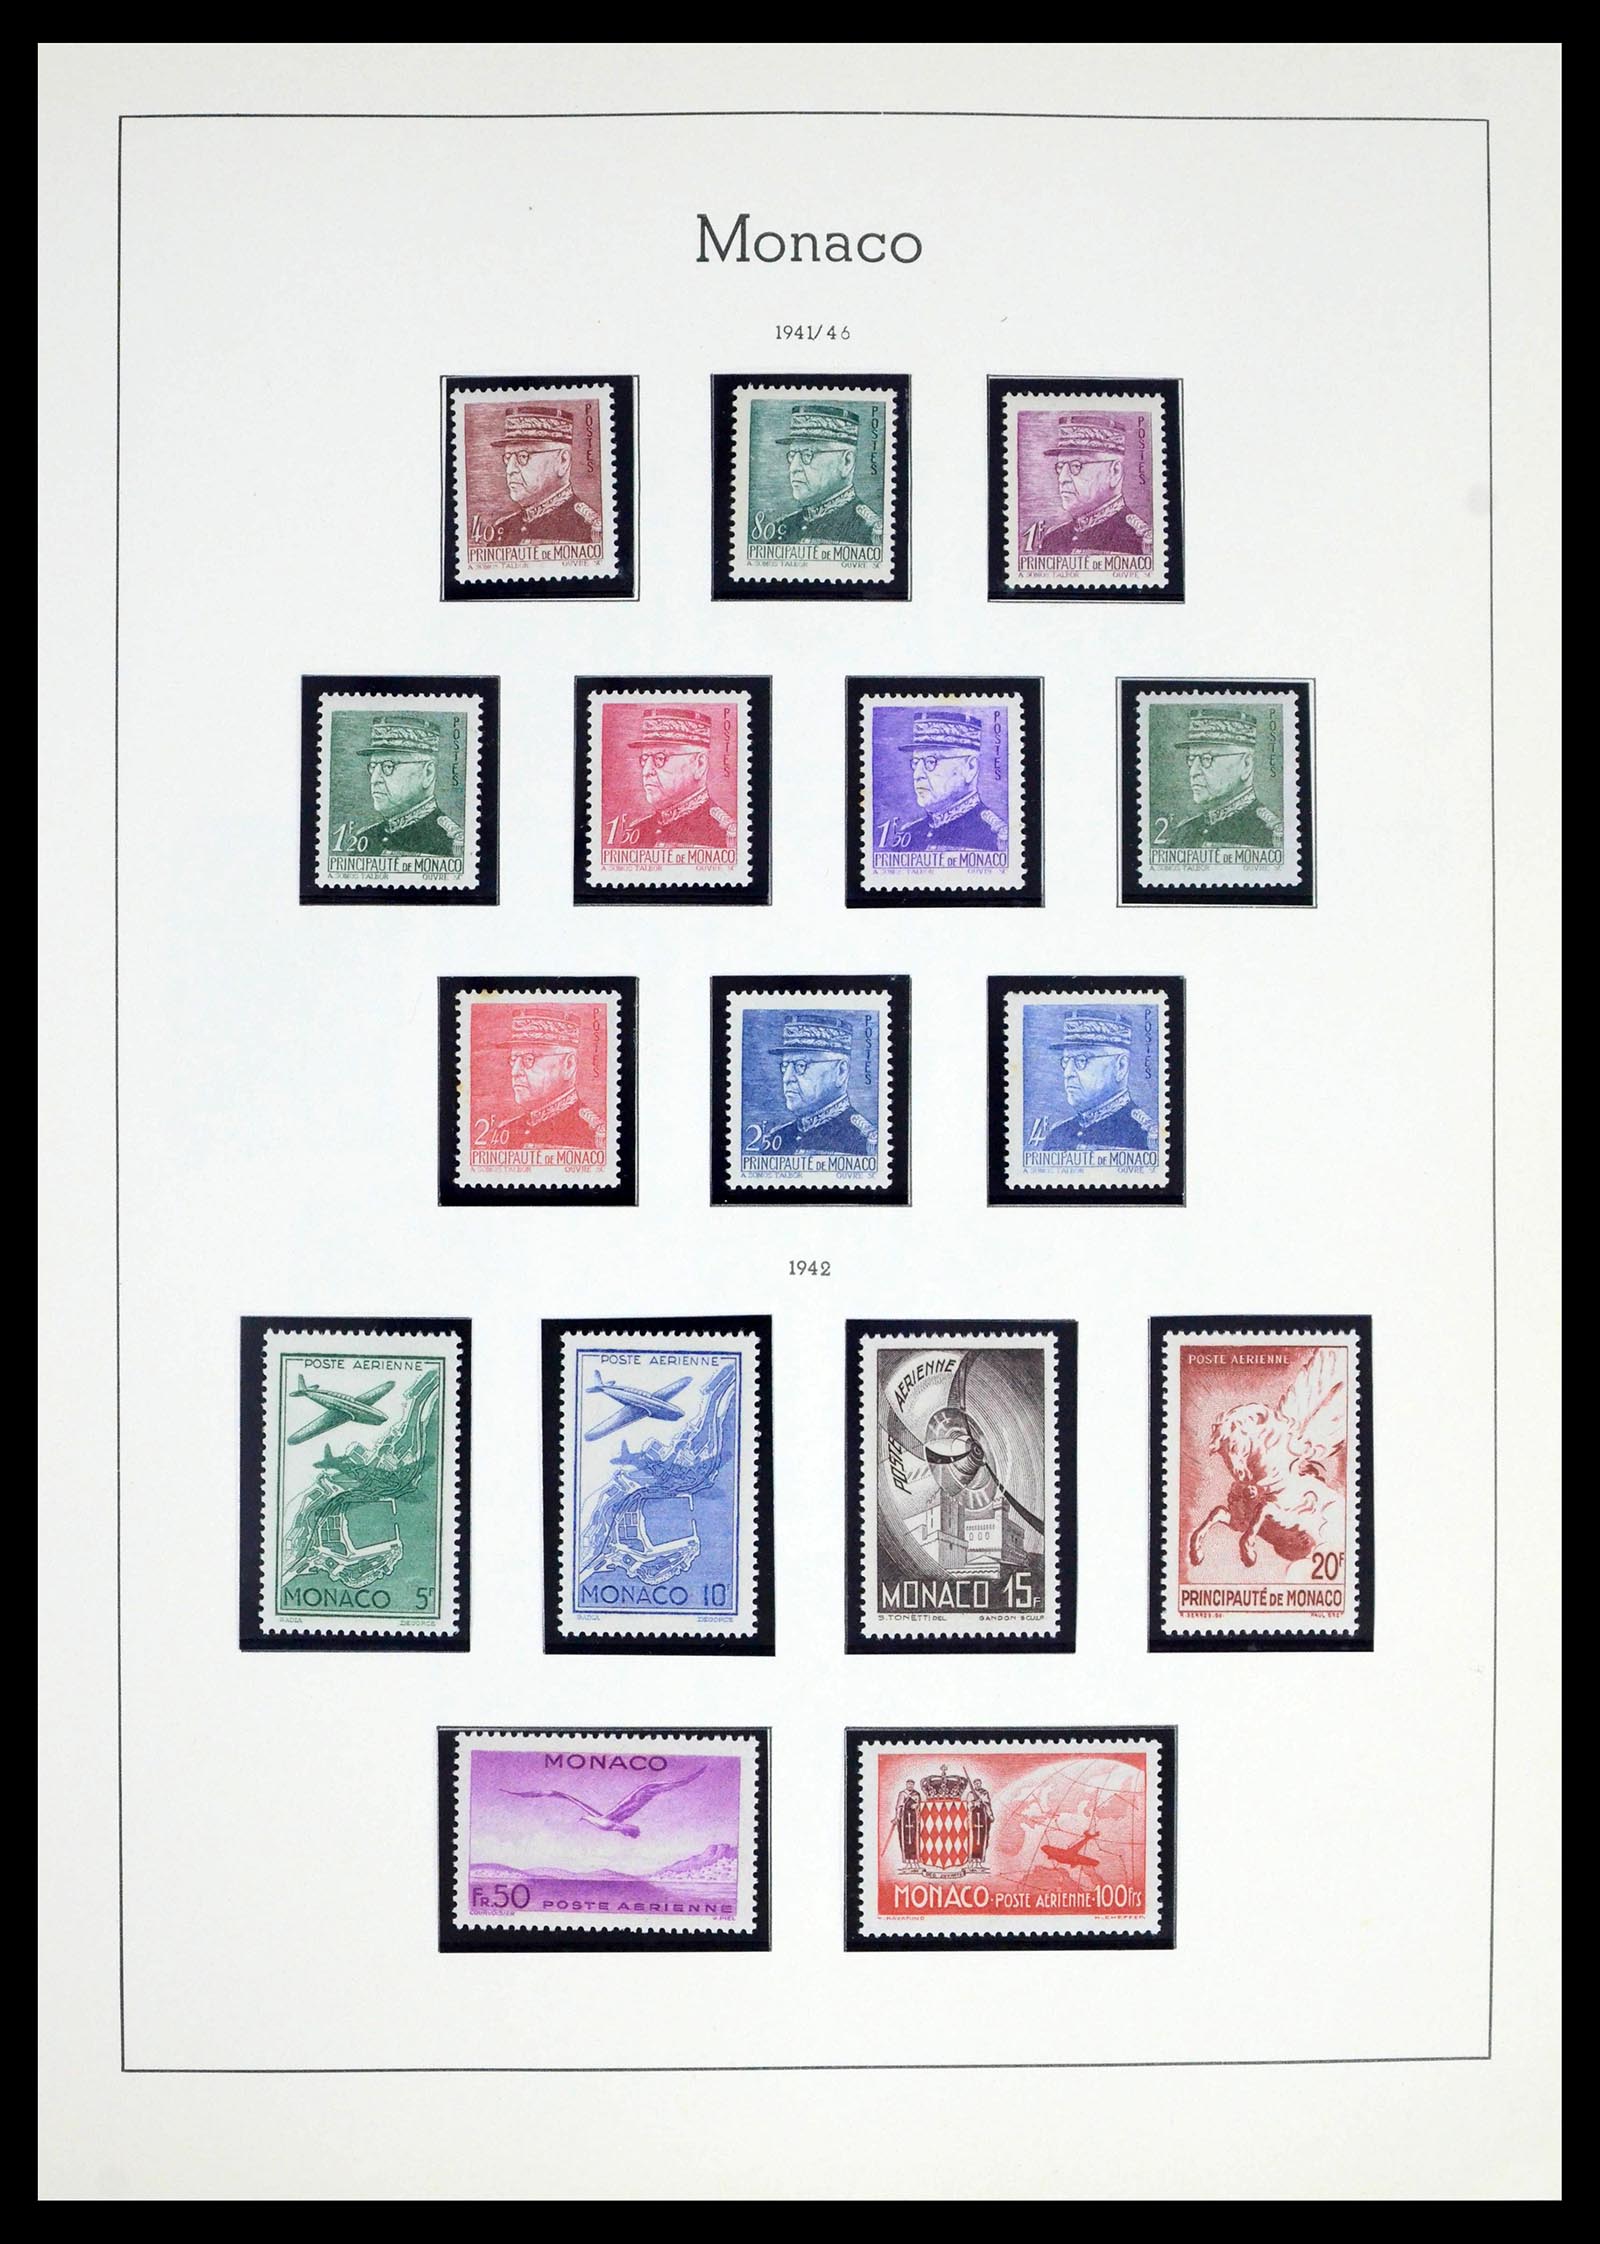 39392 0020 - Stamp collection 39392 Monaco 1885-1999.